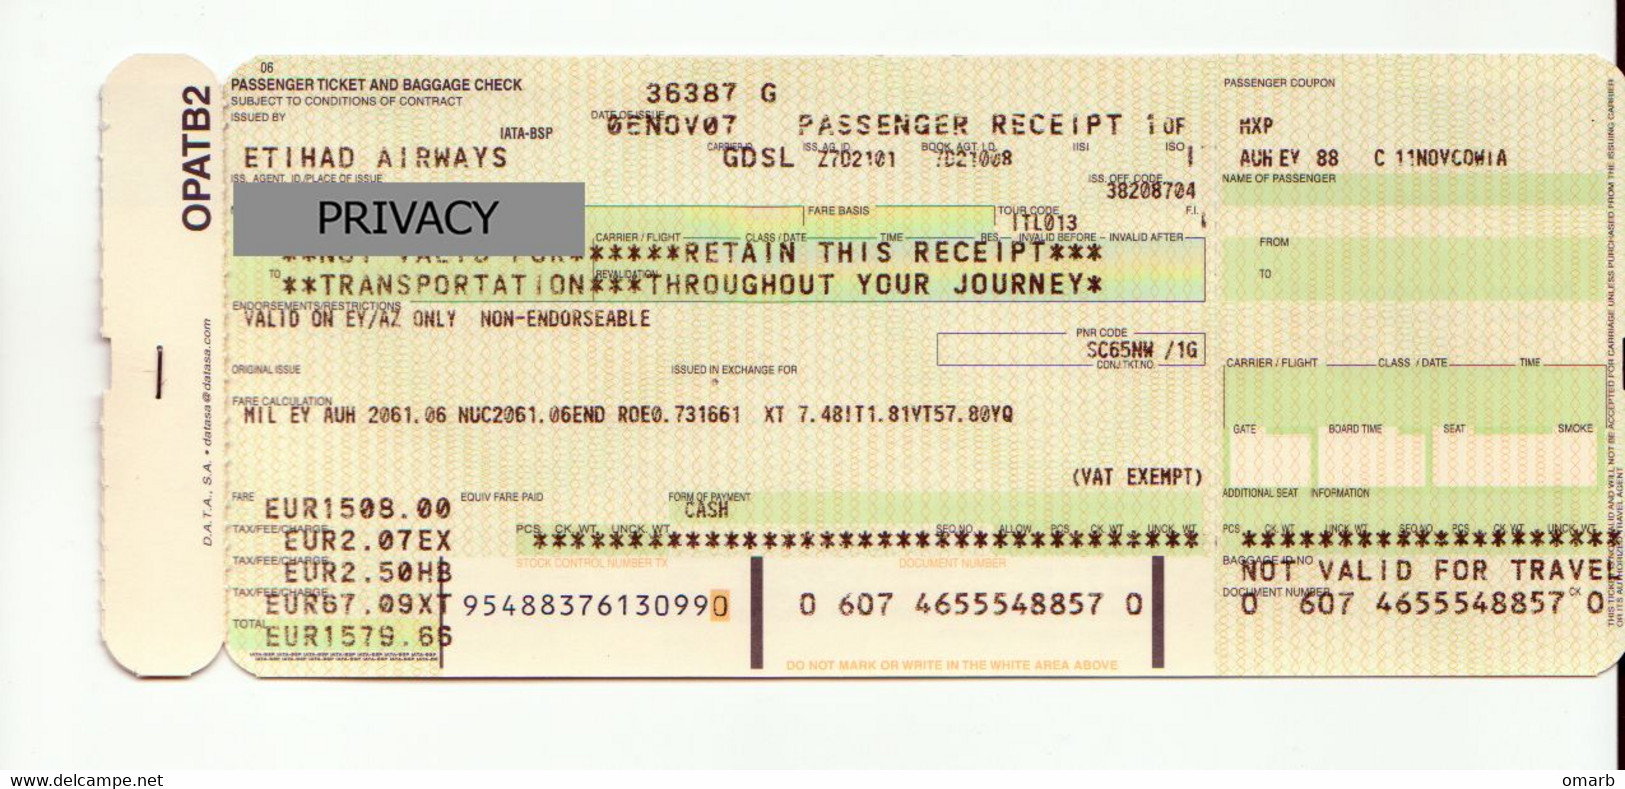 Alt1126 Etihad Airways Billets Avion Ticket Biglietto Aereo Boarding Passenger Receipt Imbarco Milano Abu Dhabi EAU 2007 - Monde